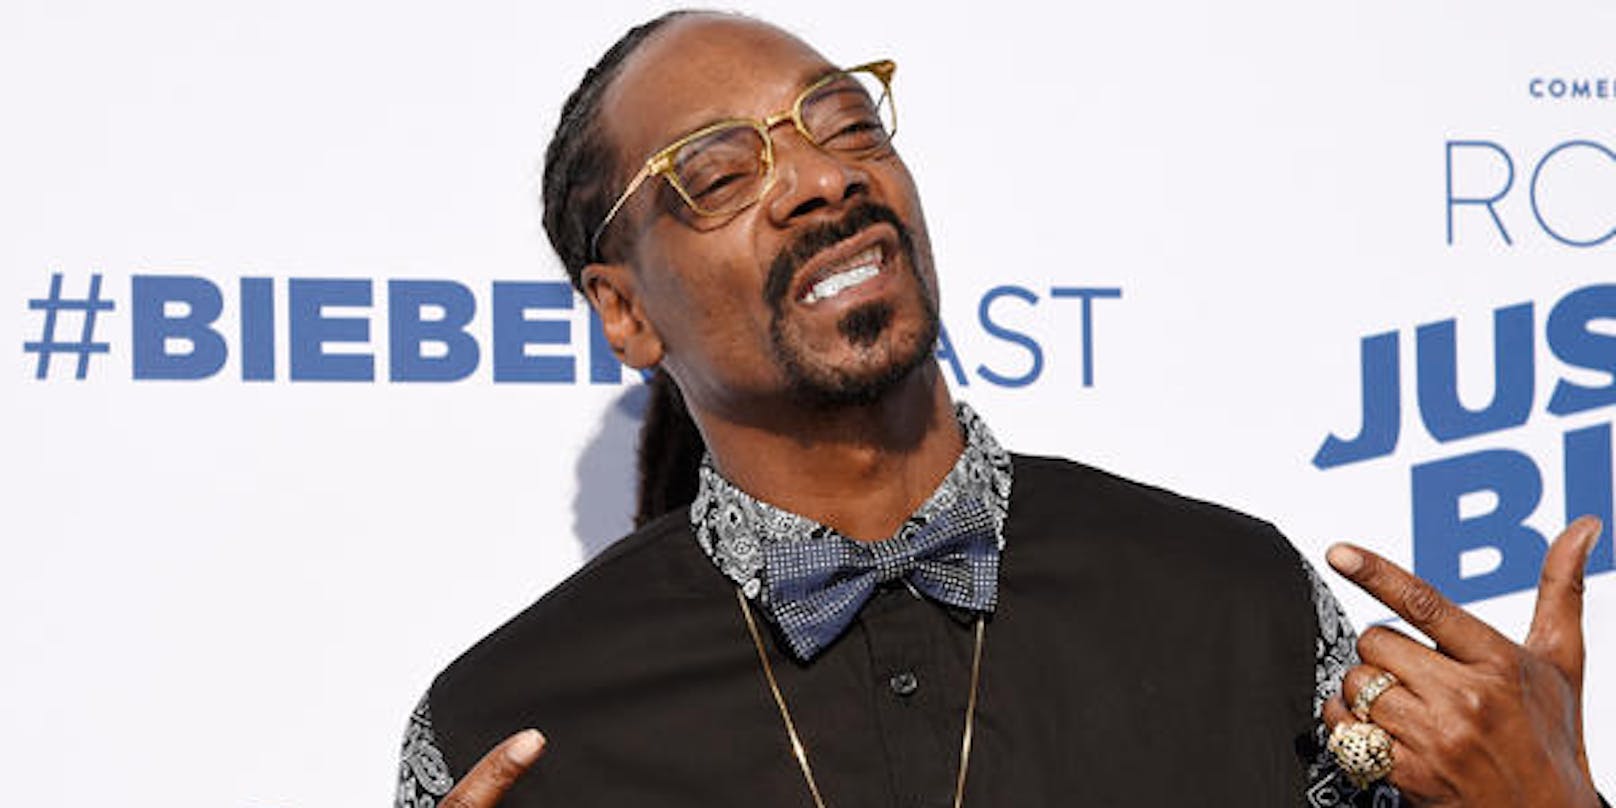 Snoop Dogg schaffte den Durchbruch als Snoop Doggy Dogg. Doch dem Namen ist er längst entwachsen.